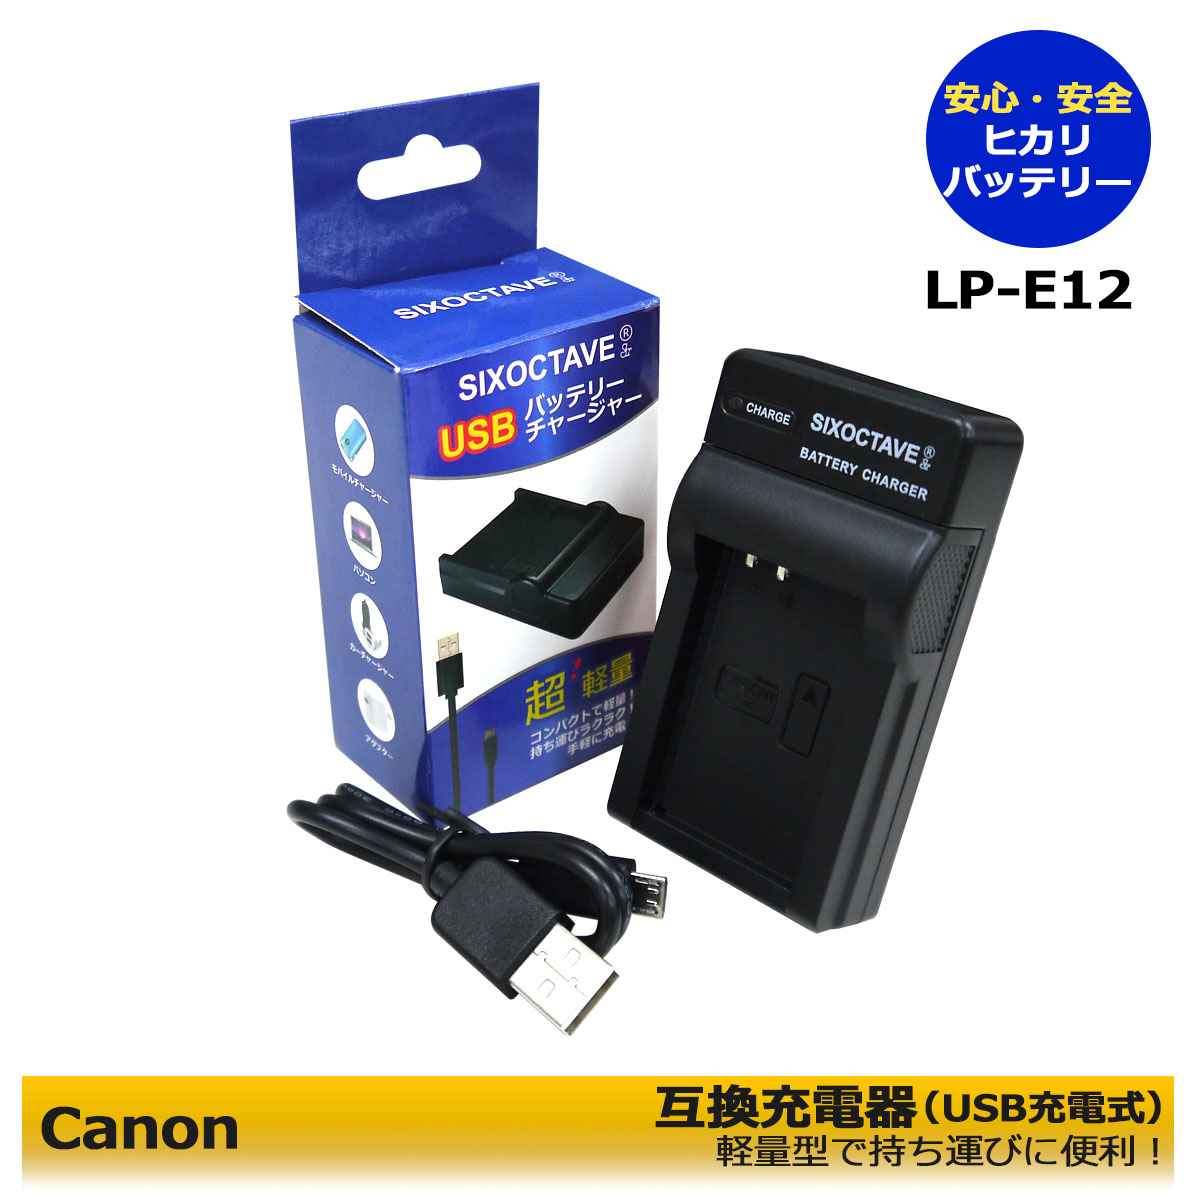 Canon　LP-E12　互換充電器 (USB充電式) LC-E12 純正バッテリーにも充電可能　 EOS Kiss X7 / EOS Kiss M / EOS Kiss M2 / EOS M / EOS M2 / EOS M10 / EOS M100 / EOS M200 / EOS 100D / EOS Rebel SL1 / PowerShot SX70 HS